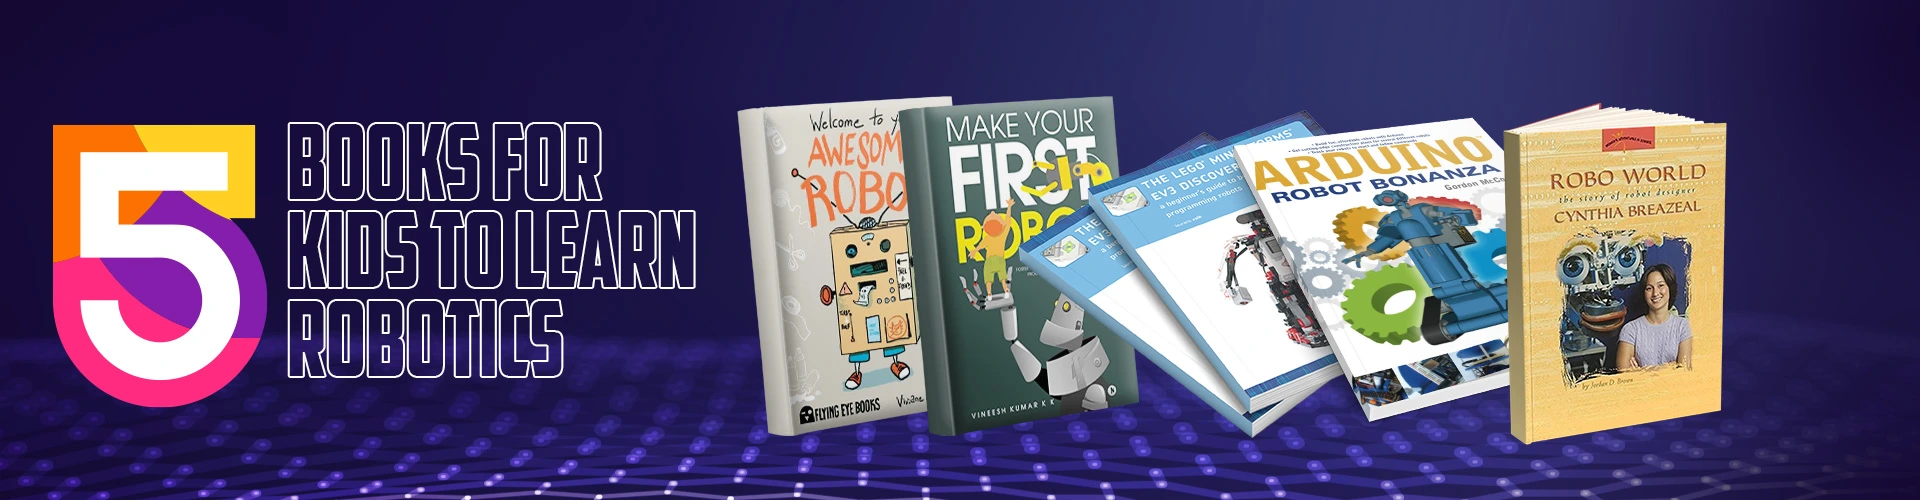 Robotics Books For Kids